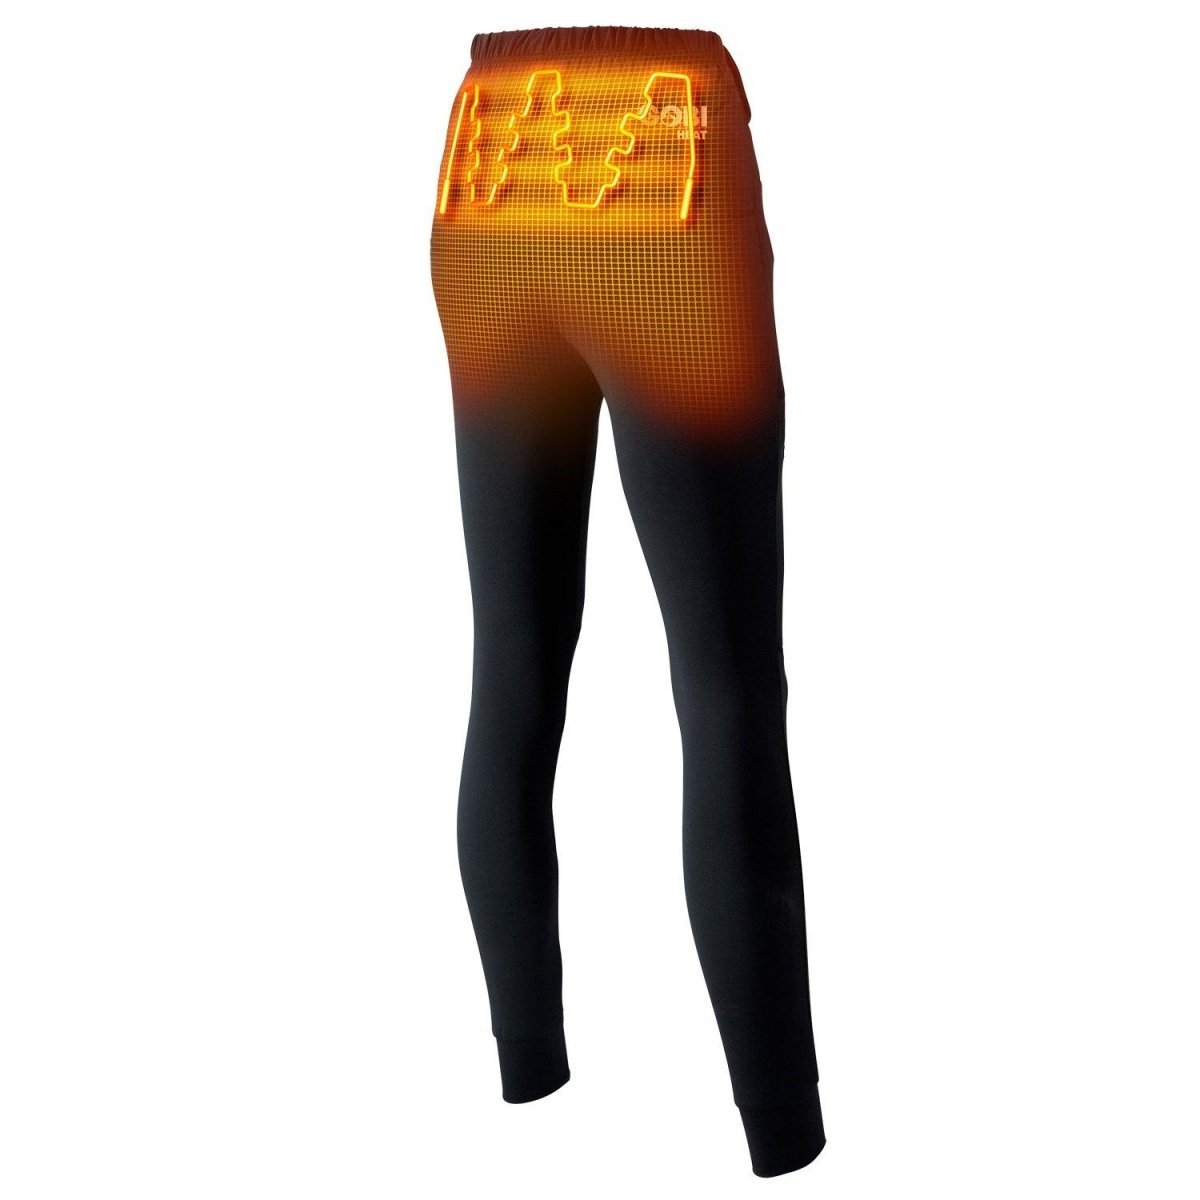 Comprar FERNIDA Women's Heated Pants for Winter Outdoor Leg Warm